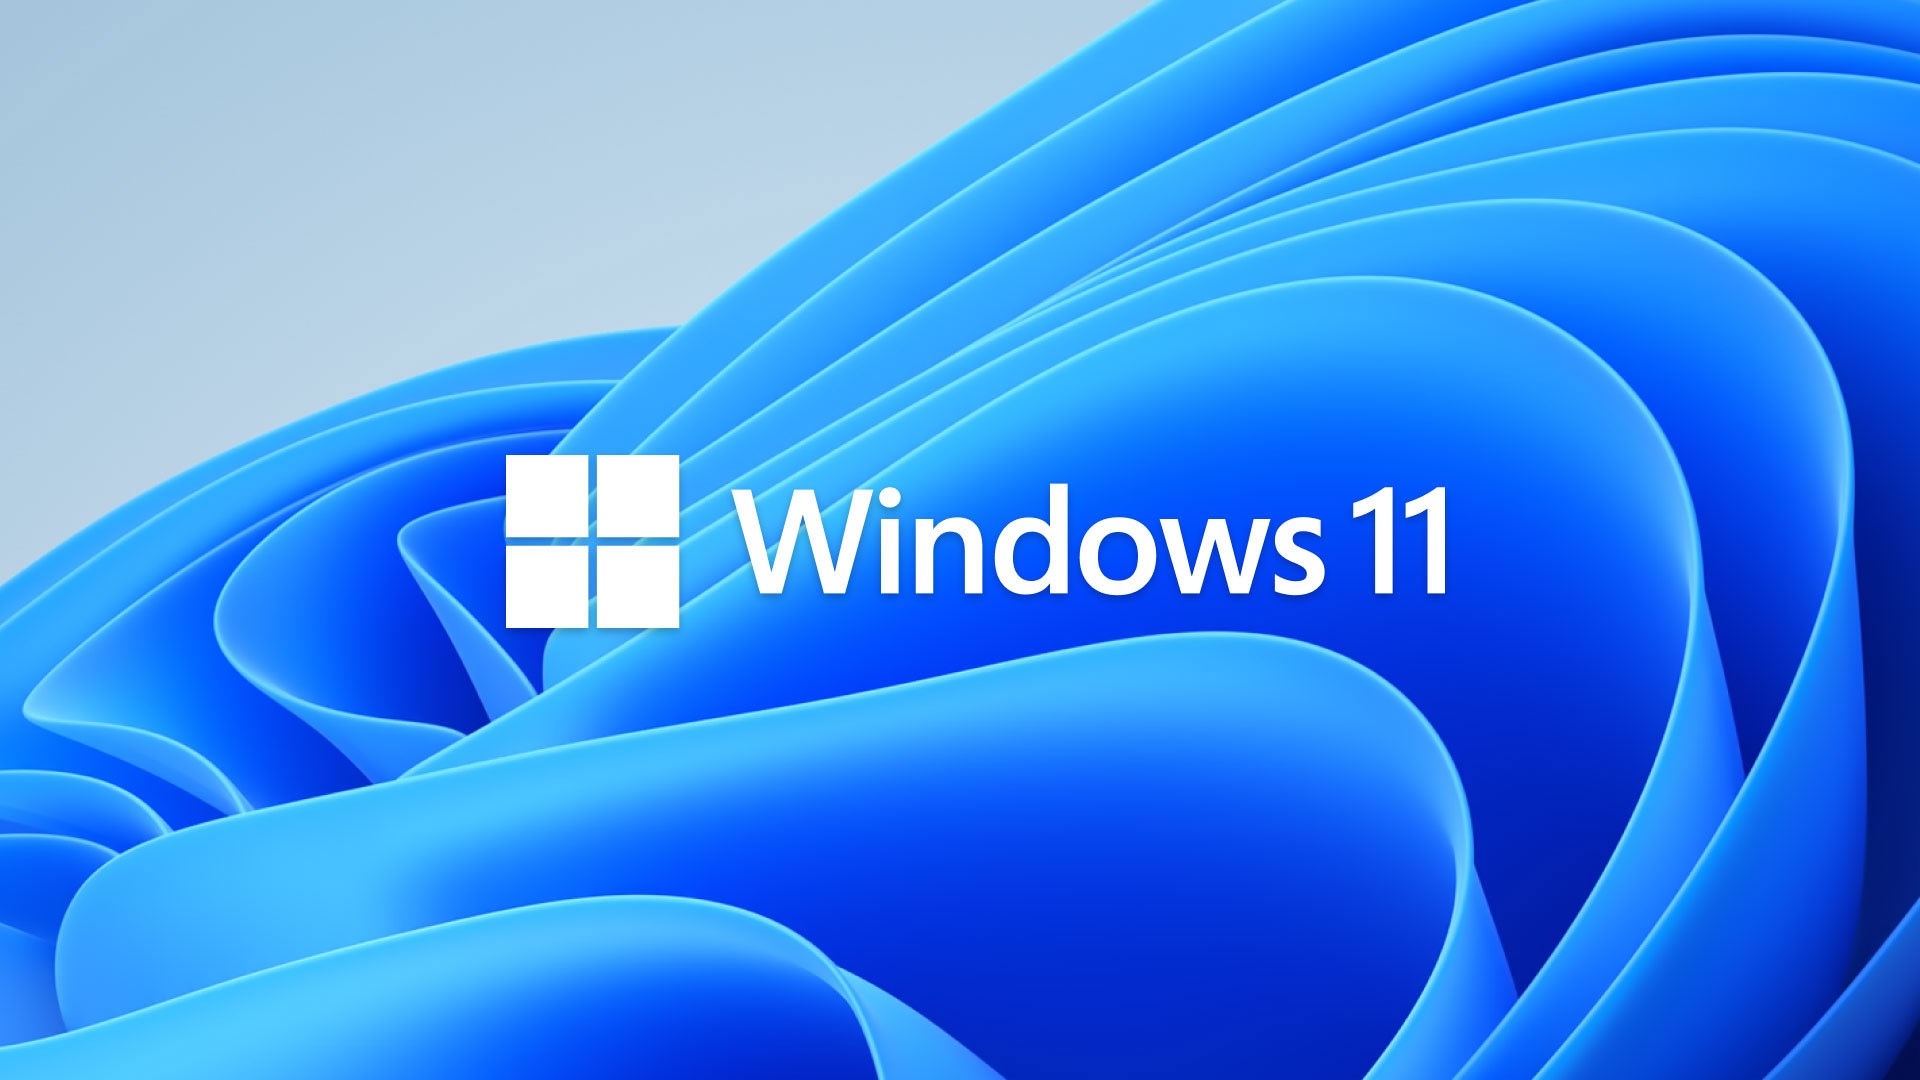 windows 11 ücretsiz mi